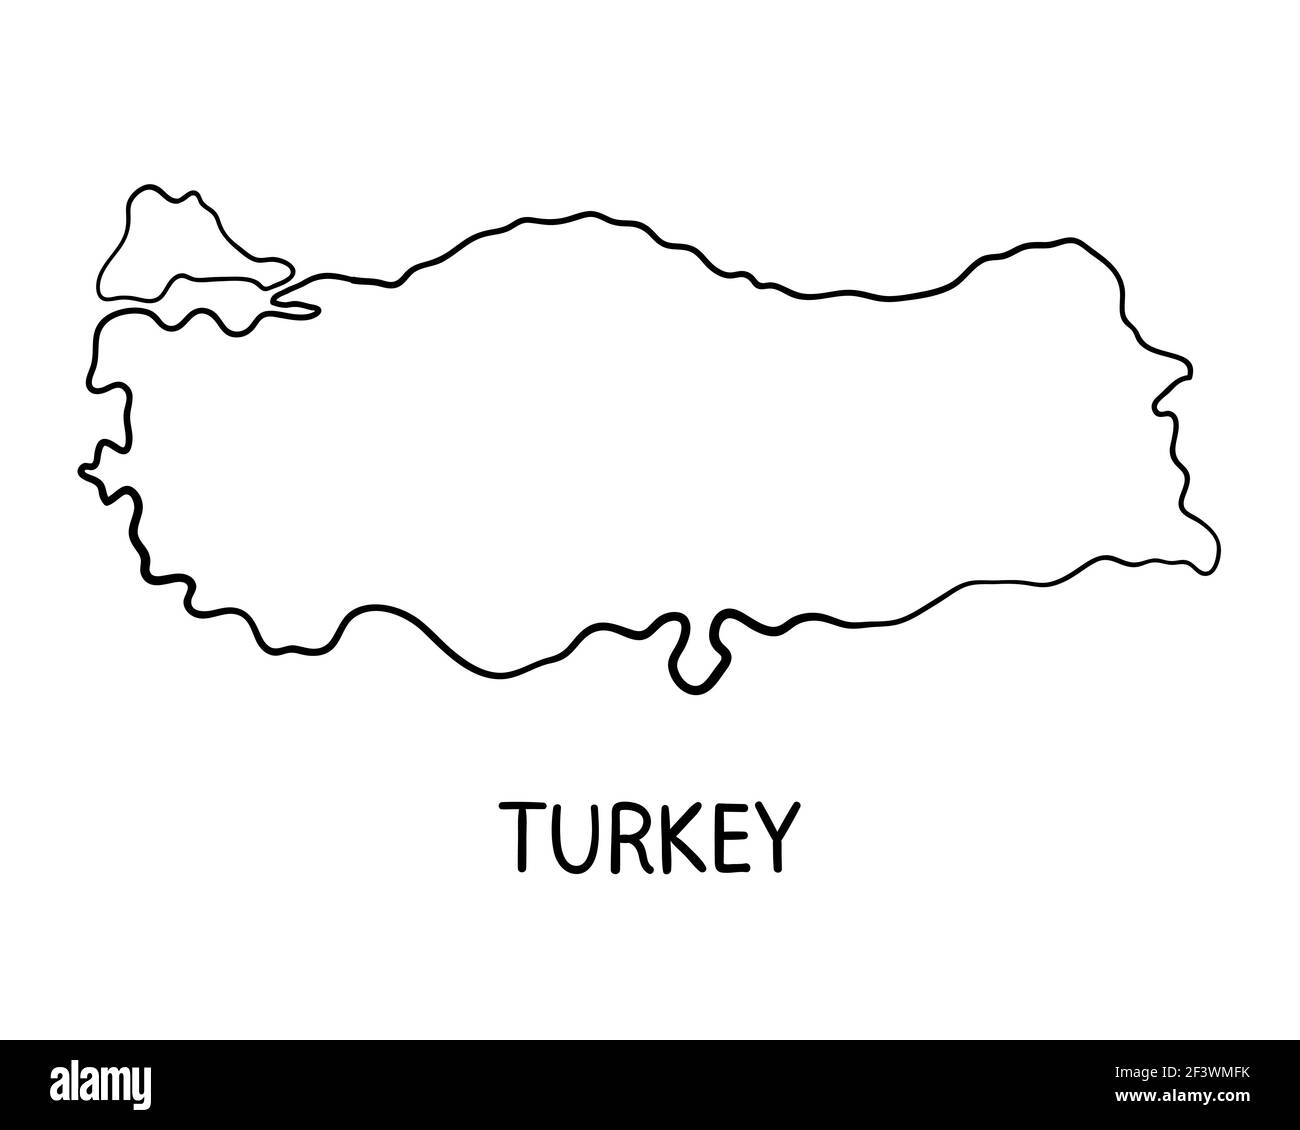 Турция картинки черно белые